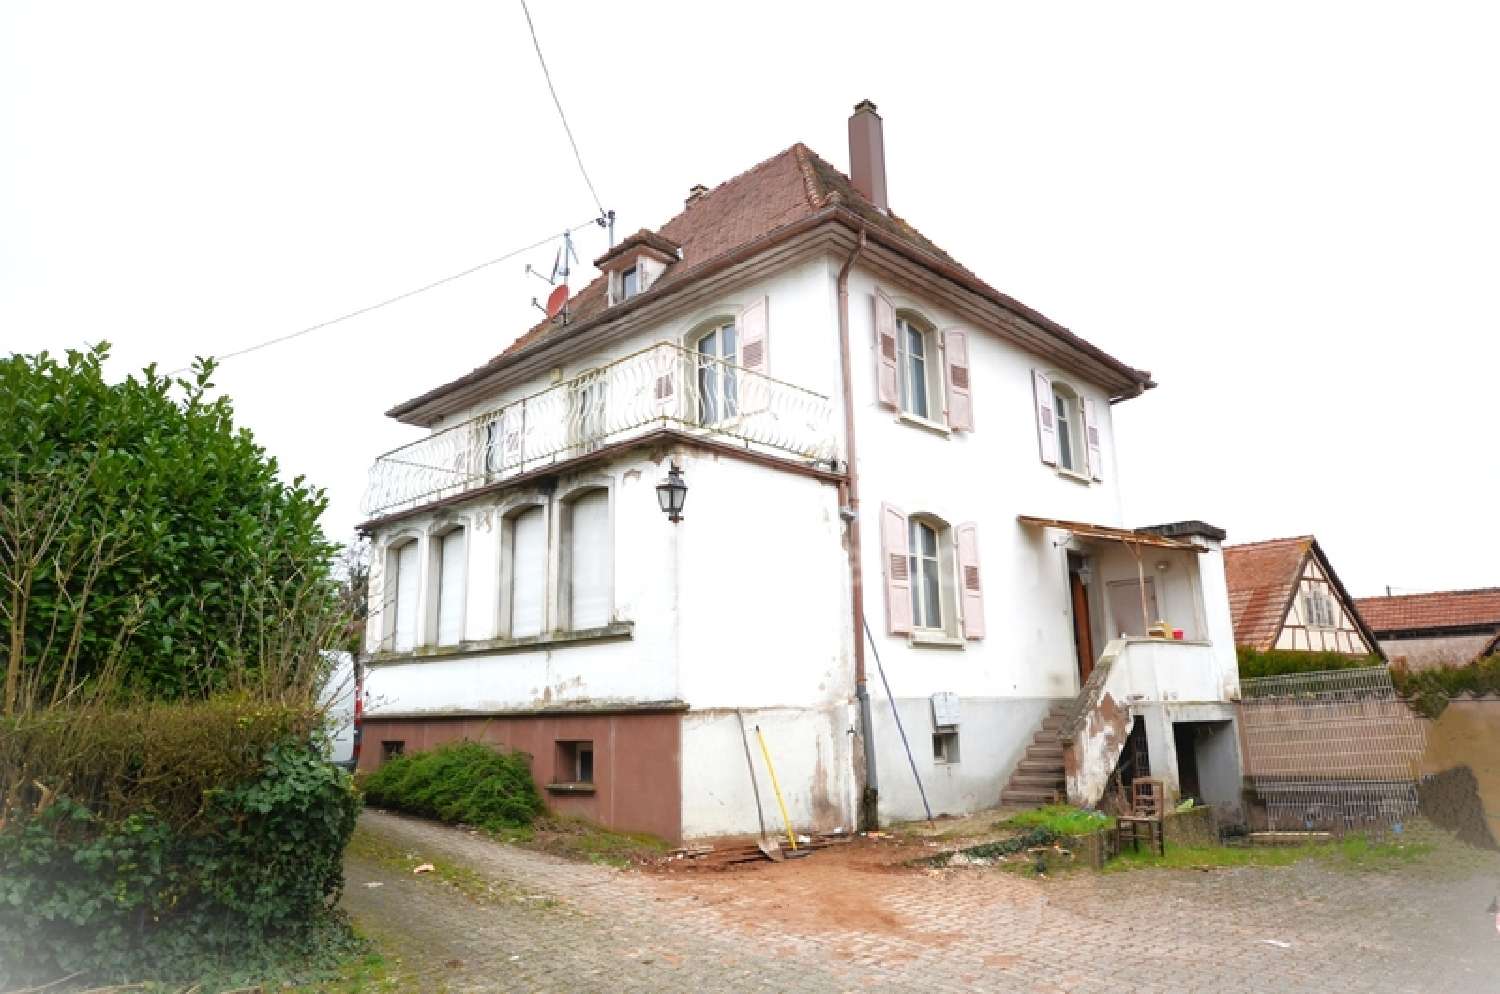  à vendre maison bourgeoise Erstein Bas-Rhin 2